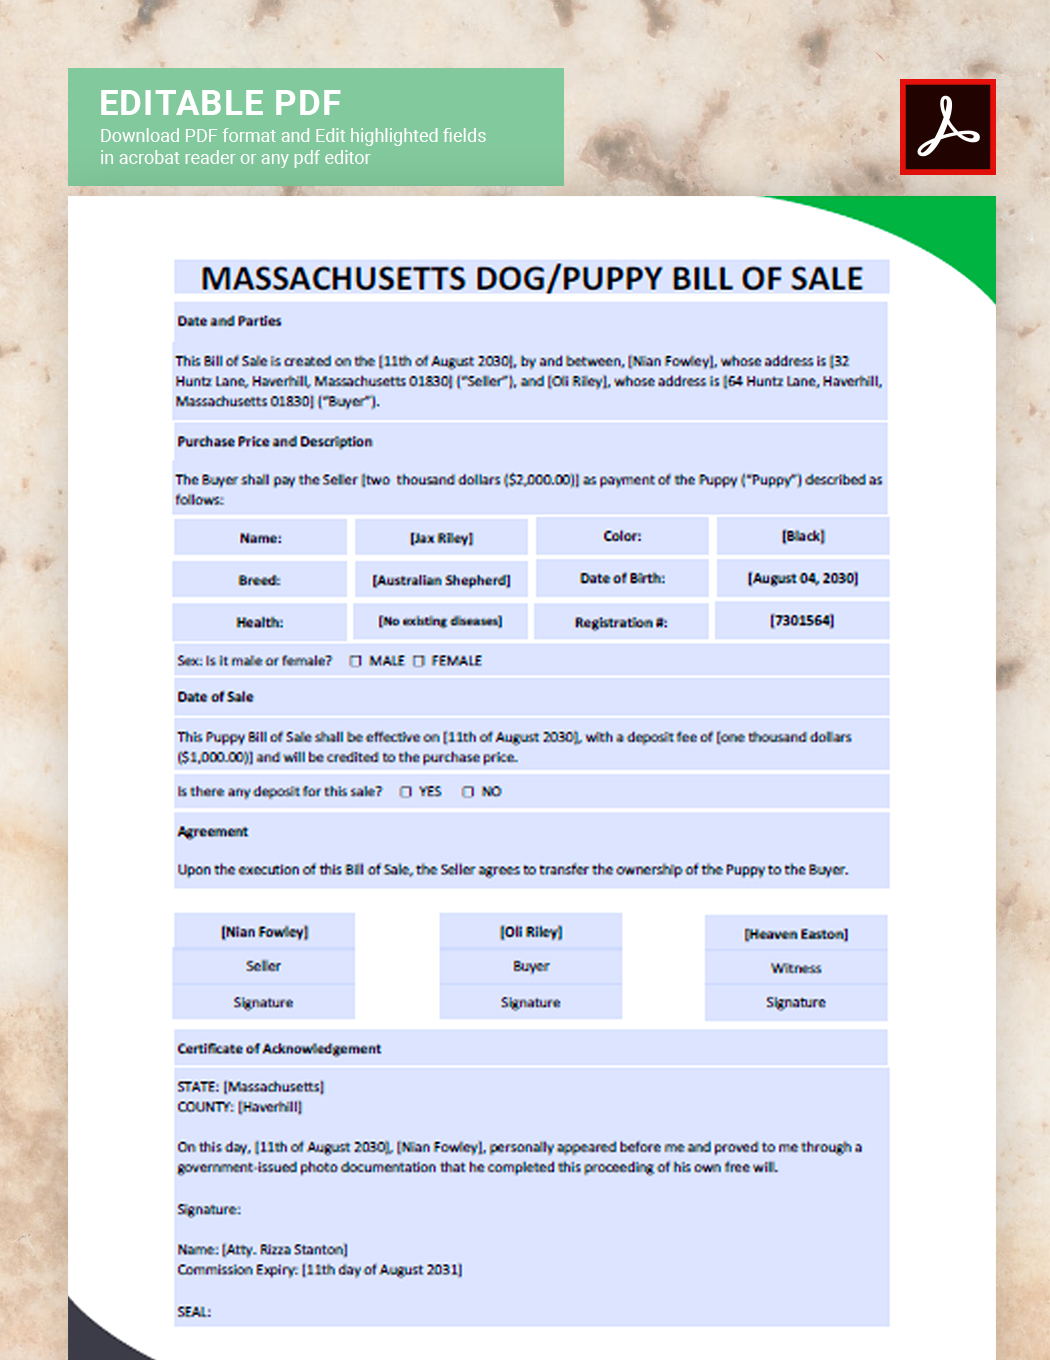 Massachusetts Dog / Puppy Bill of Sale Template